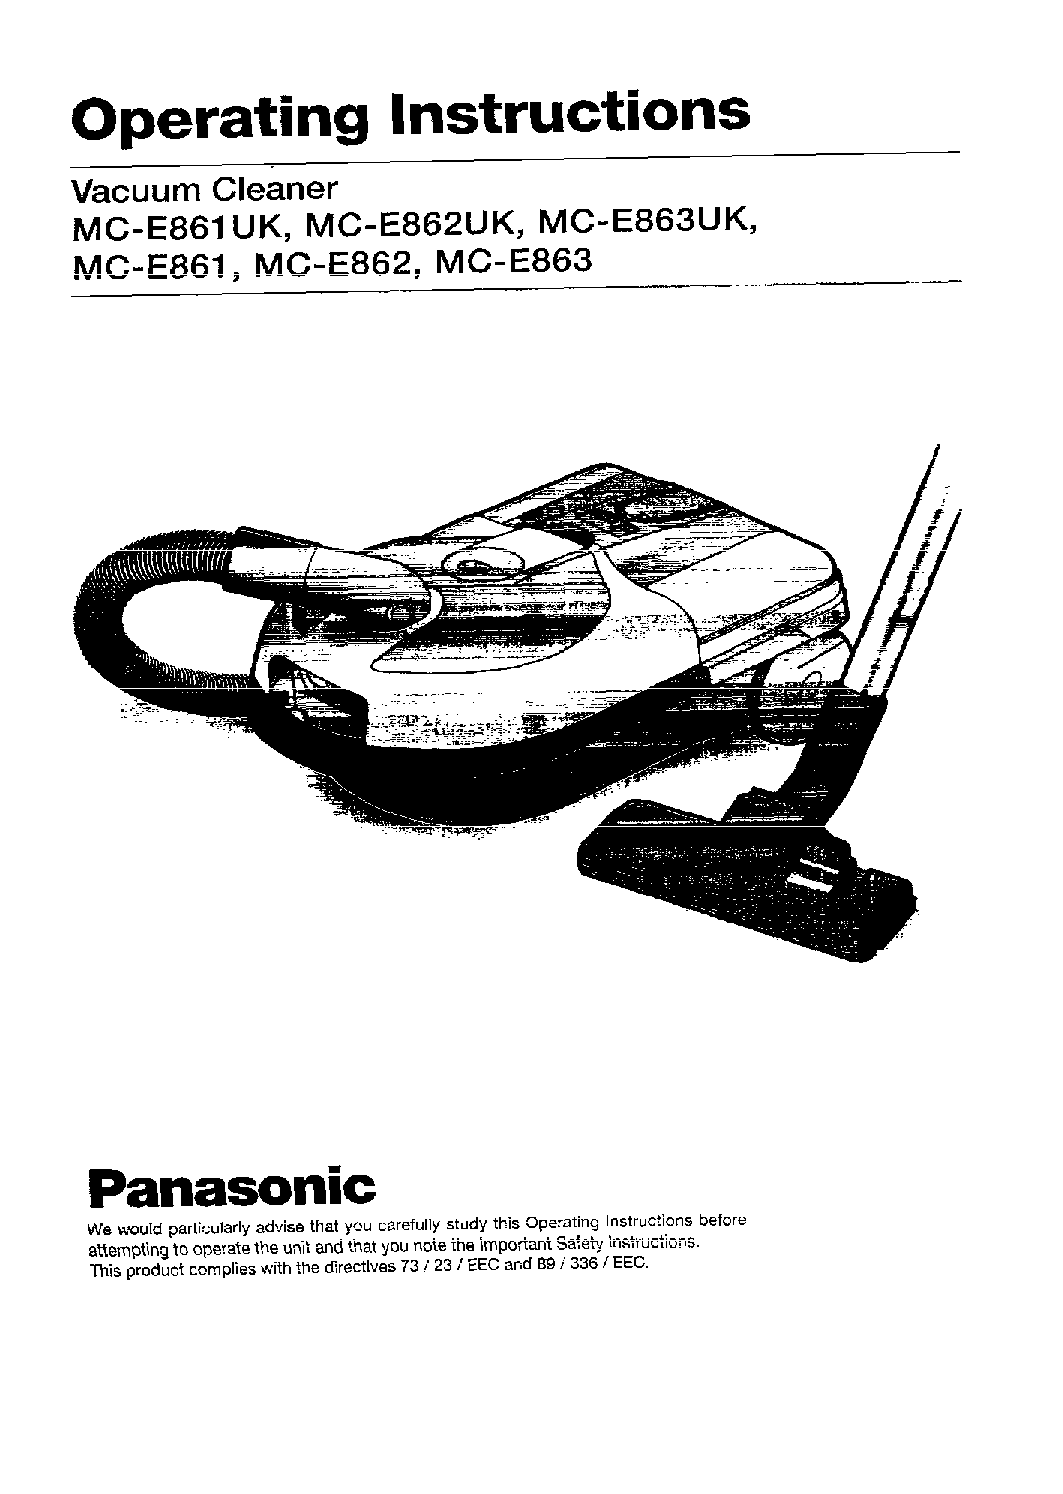 Panasonic MC-E862, MC-E862UK, MC-E861UK, MC-E863UK, MC-E861 User Manual